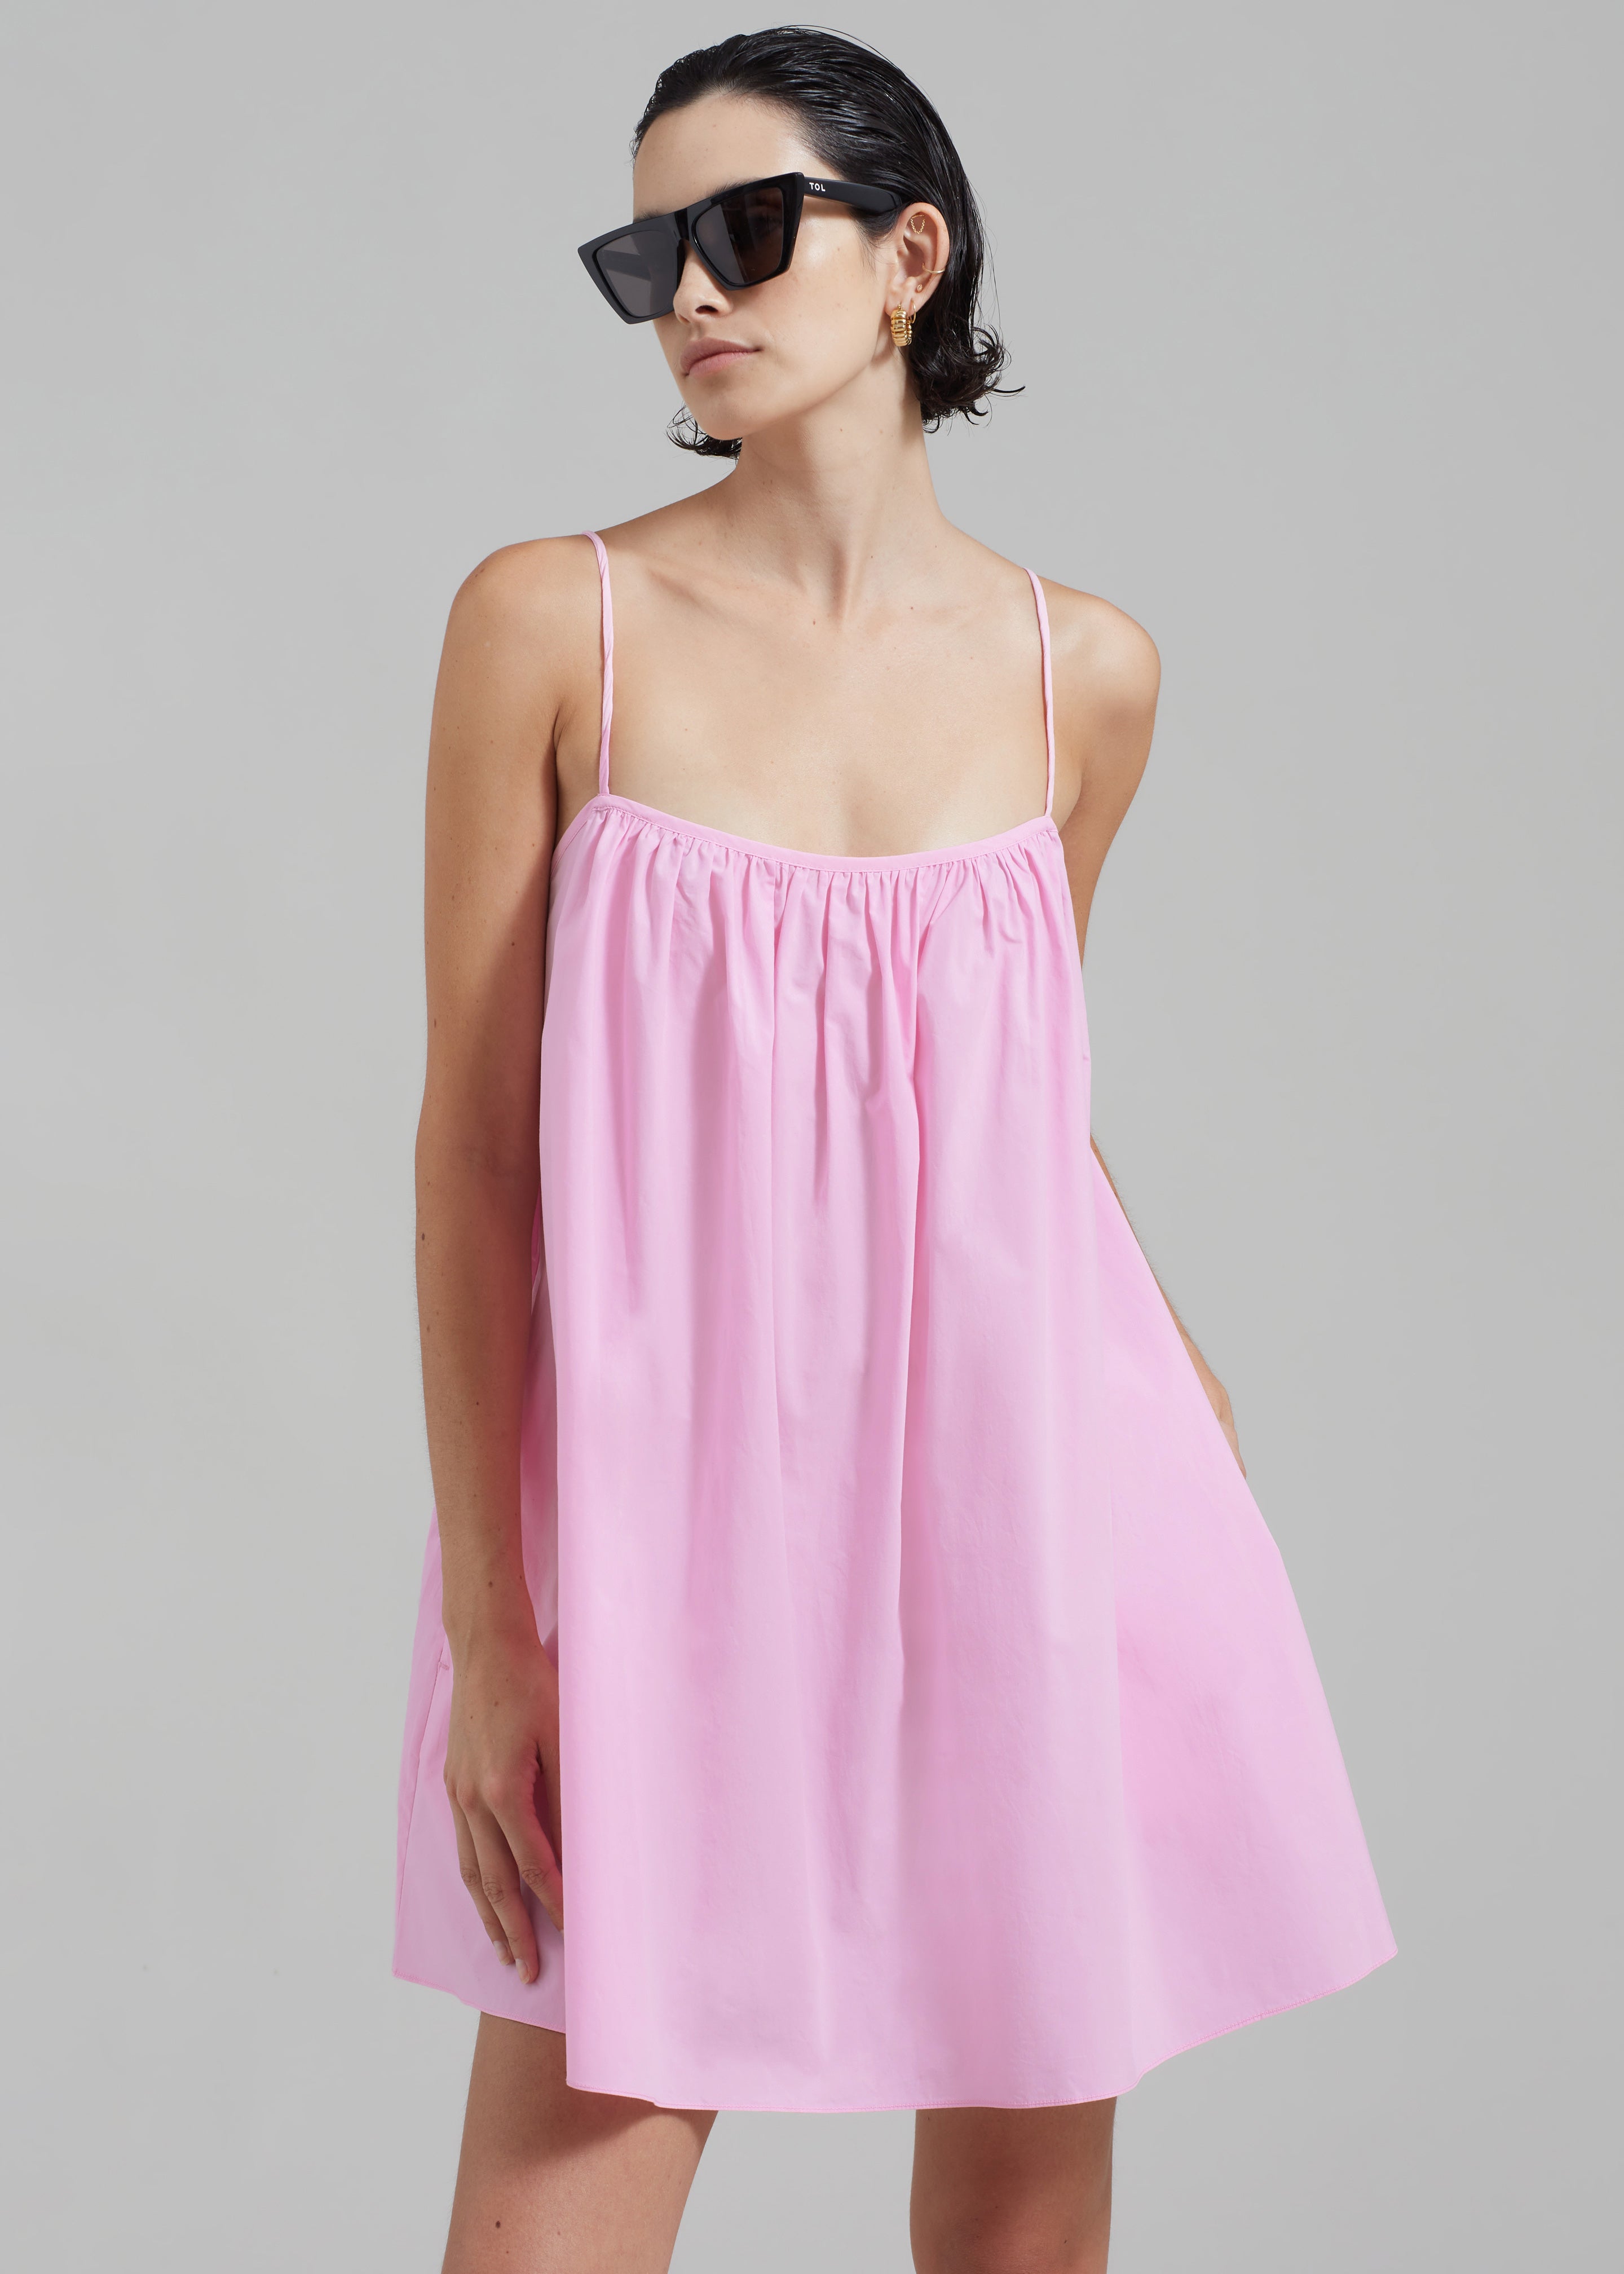 Matteau Voluminous Cami Mini Dress - Rosewater - 1